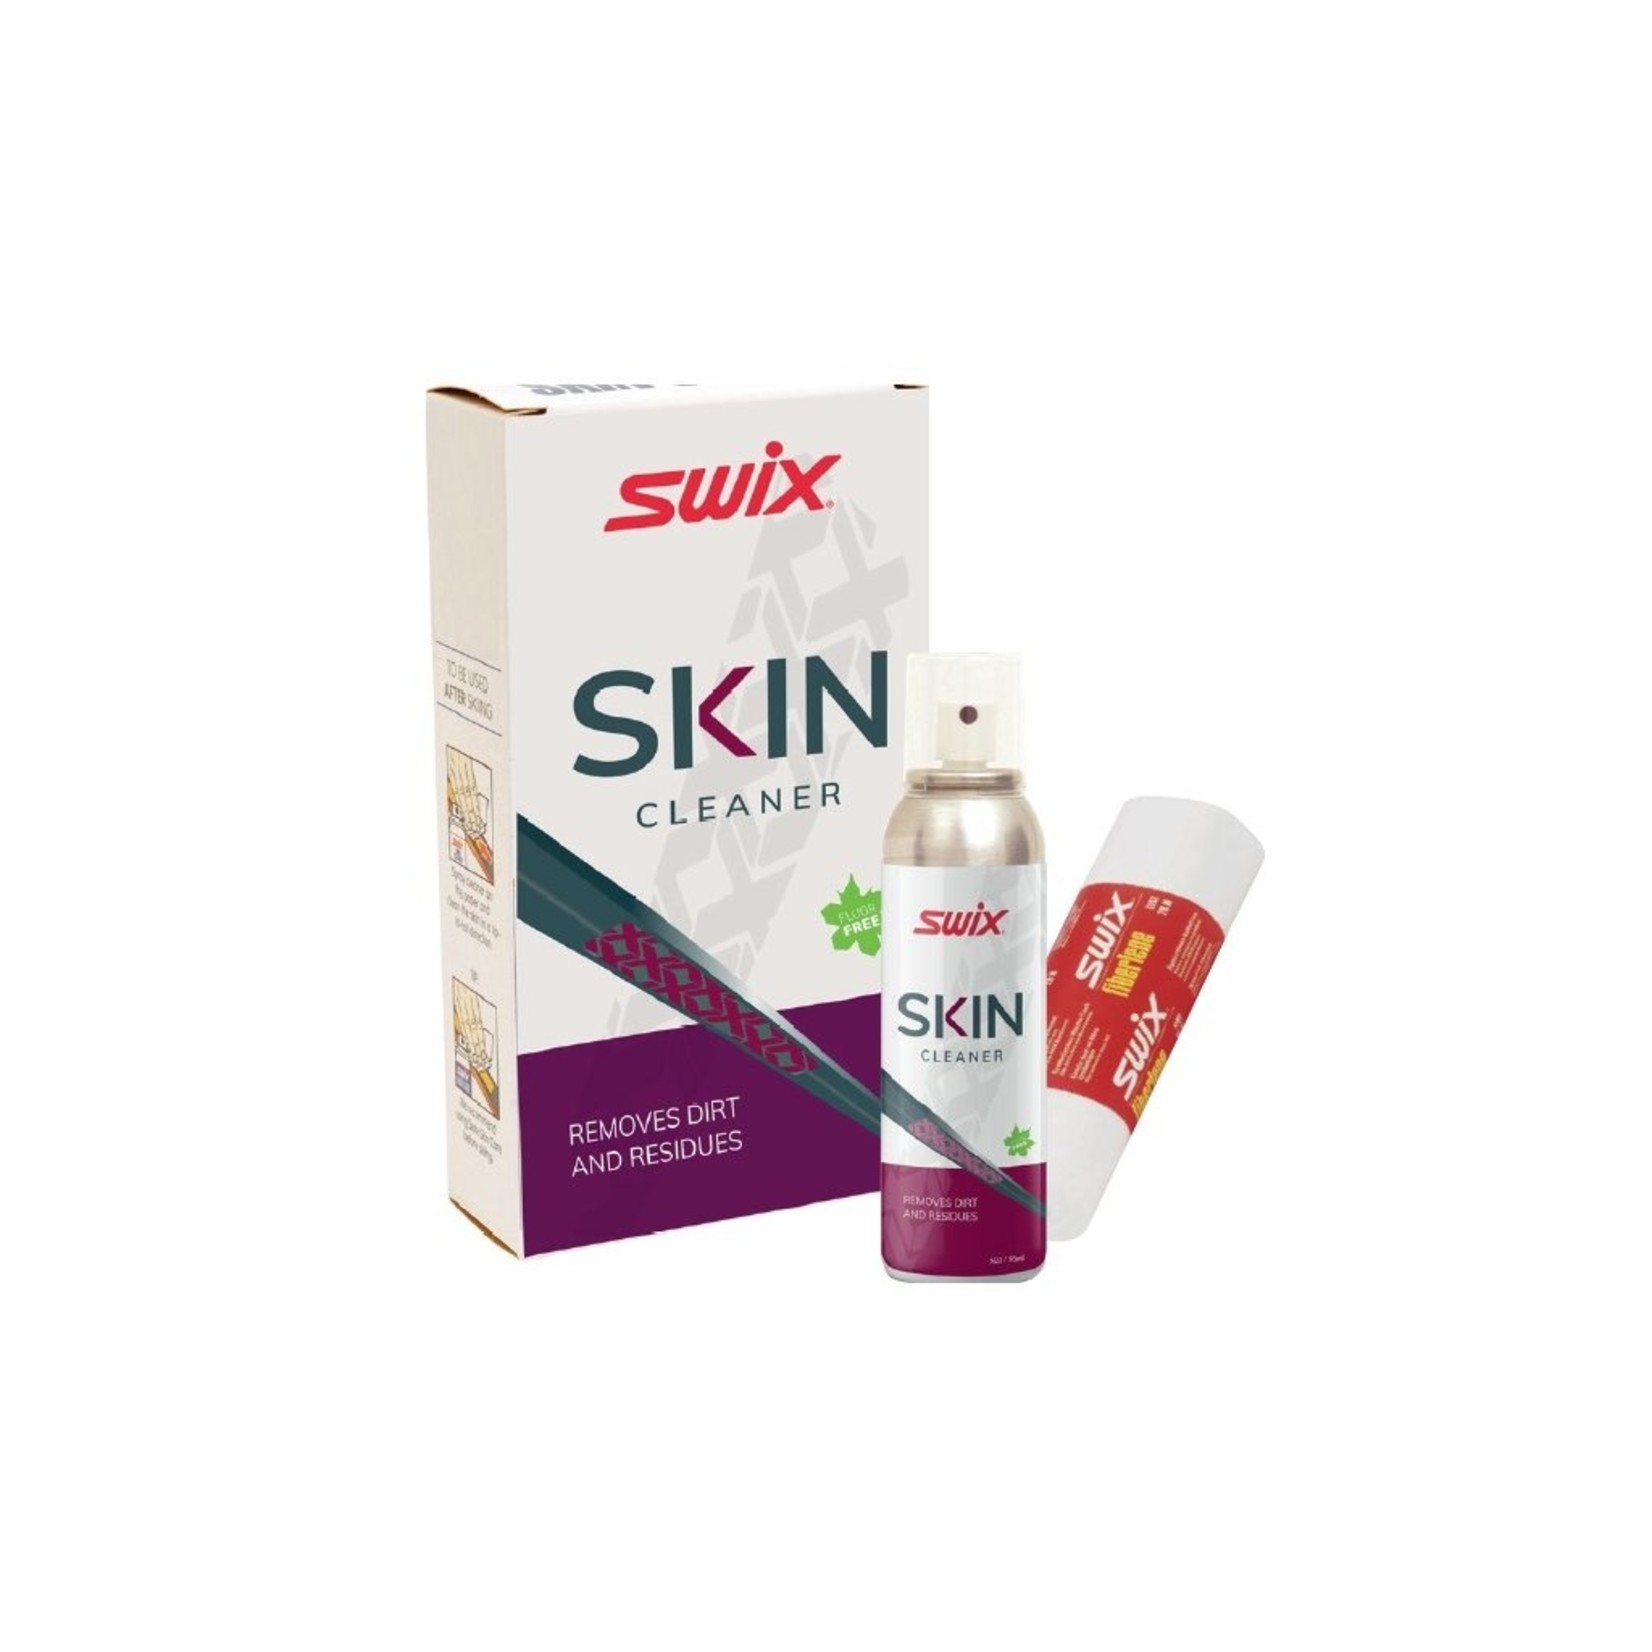 Swix Swix Skin Cleaner Kit